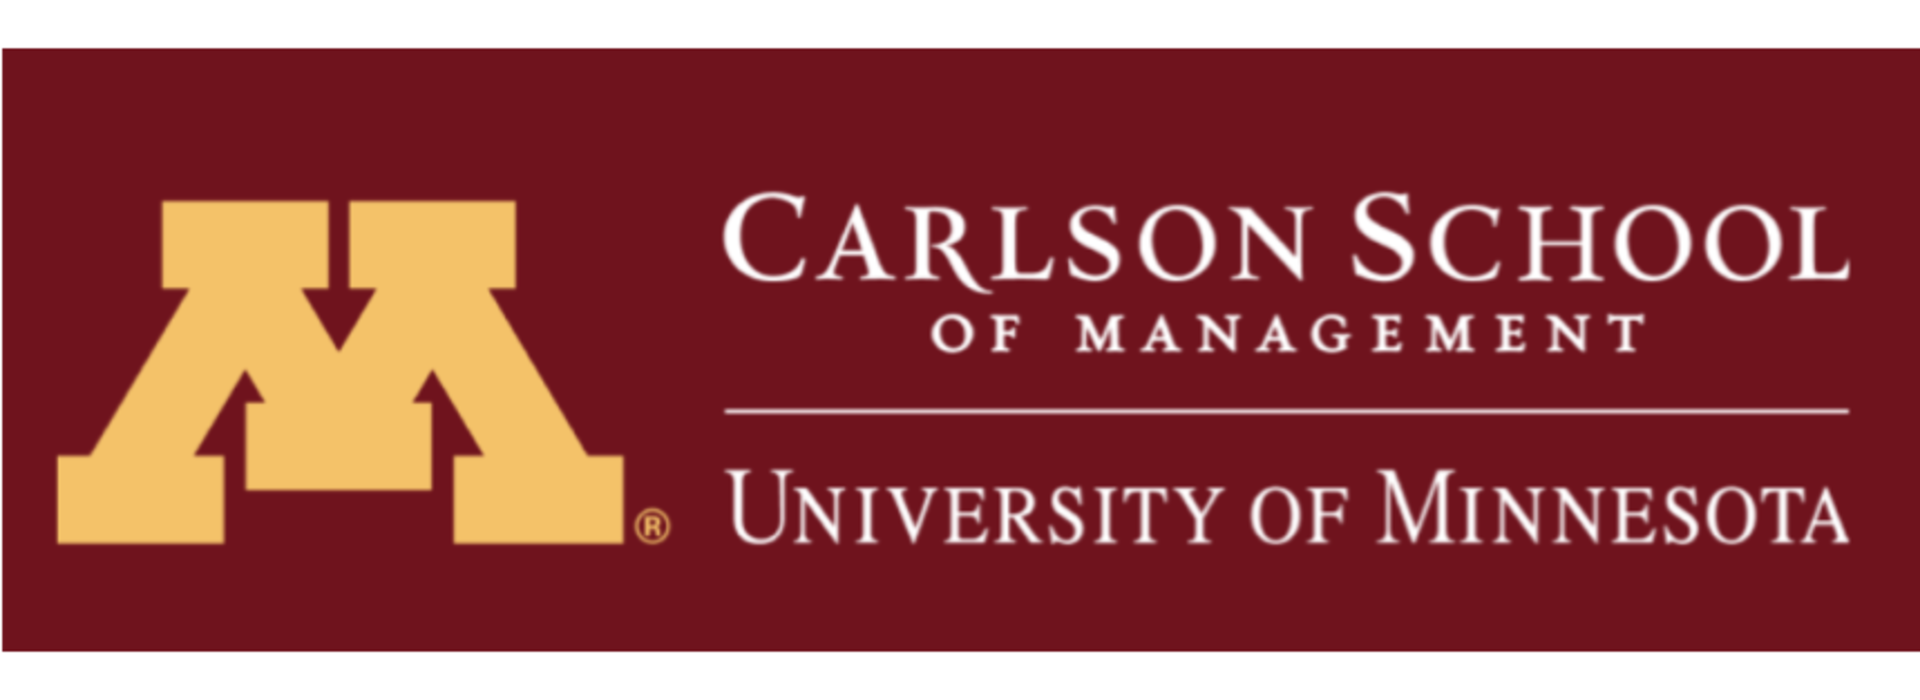 Logo reading "Carlson School of Management"